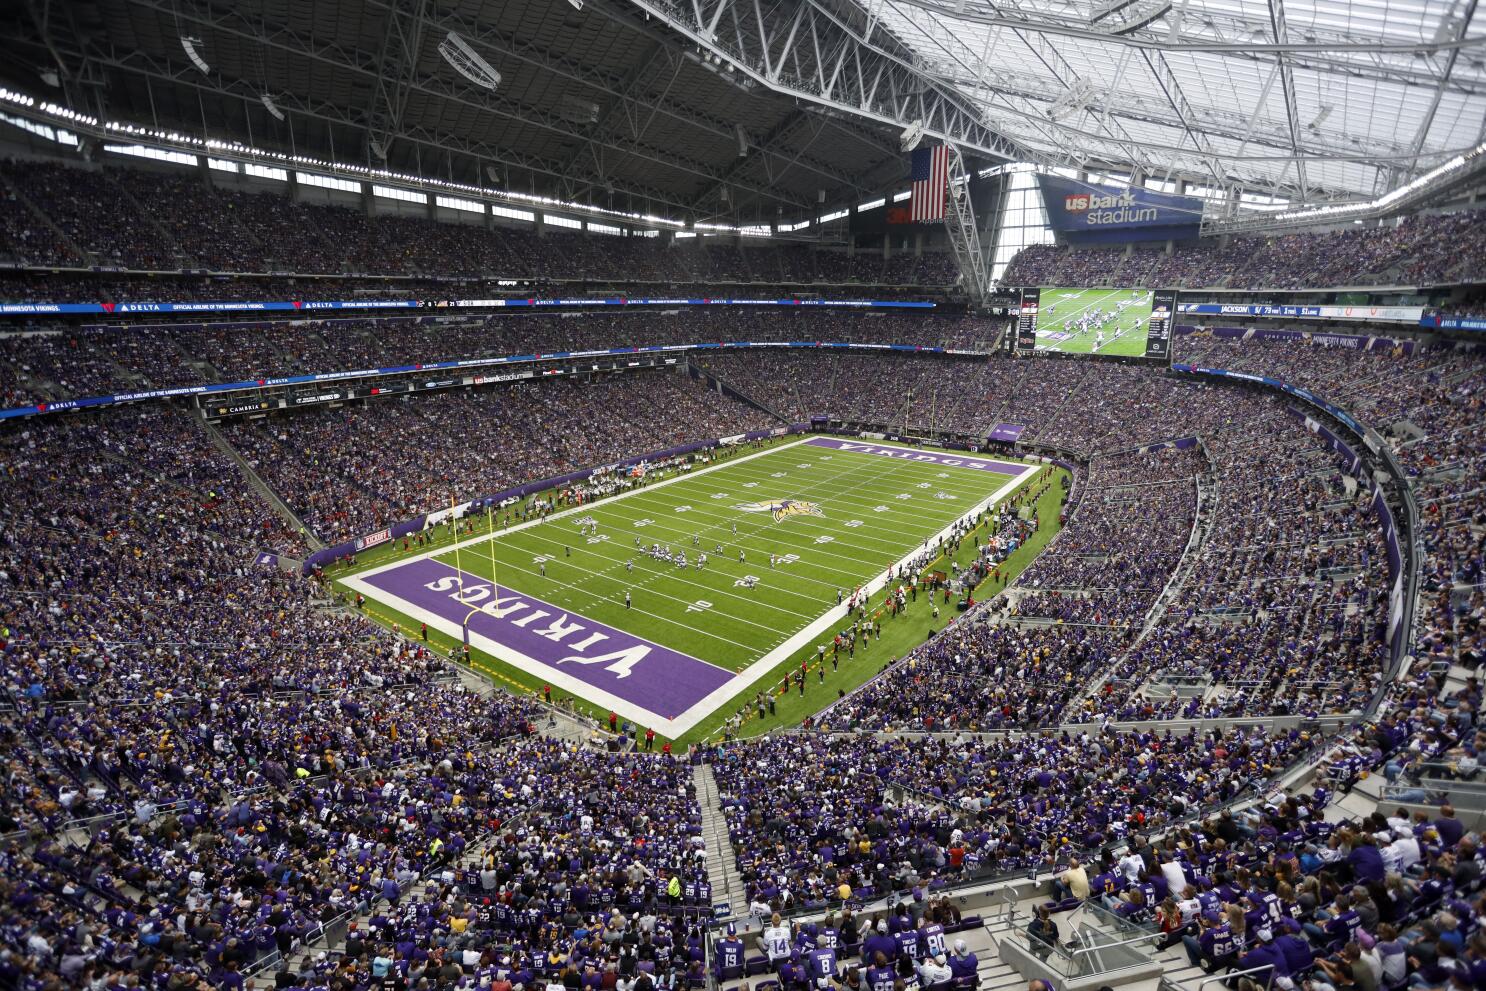 U.S. Bank Stadium ranked as No. 1 venue in NFL